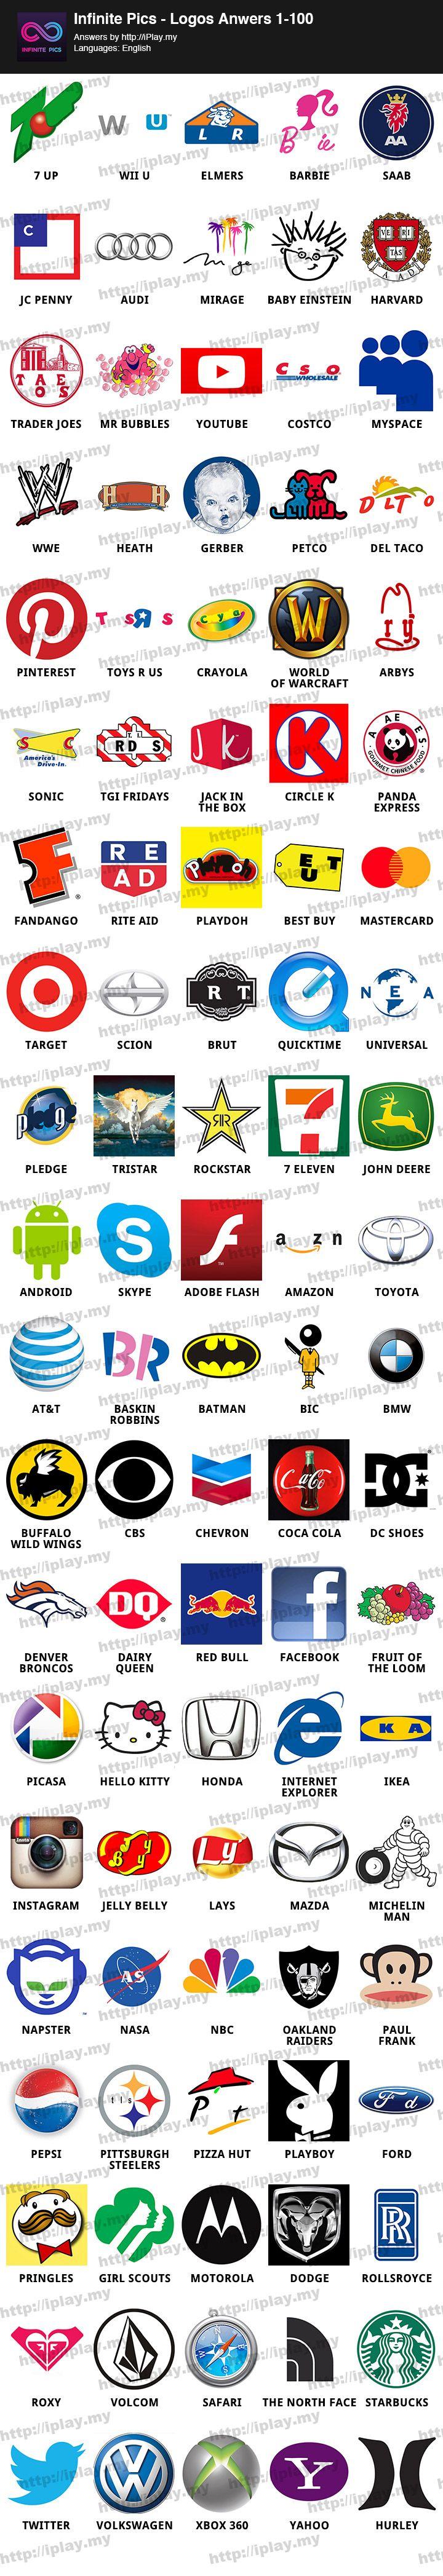 100 Pics Answers Logo - Infinite Pics – Logos Answers | iPlay.my